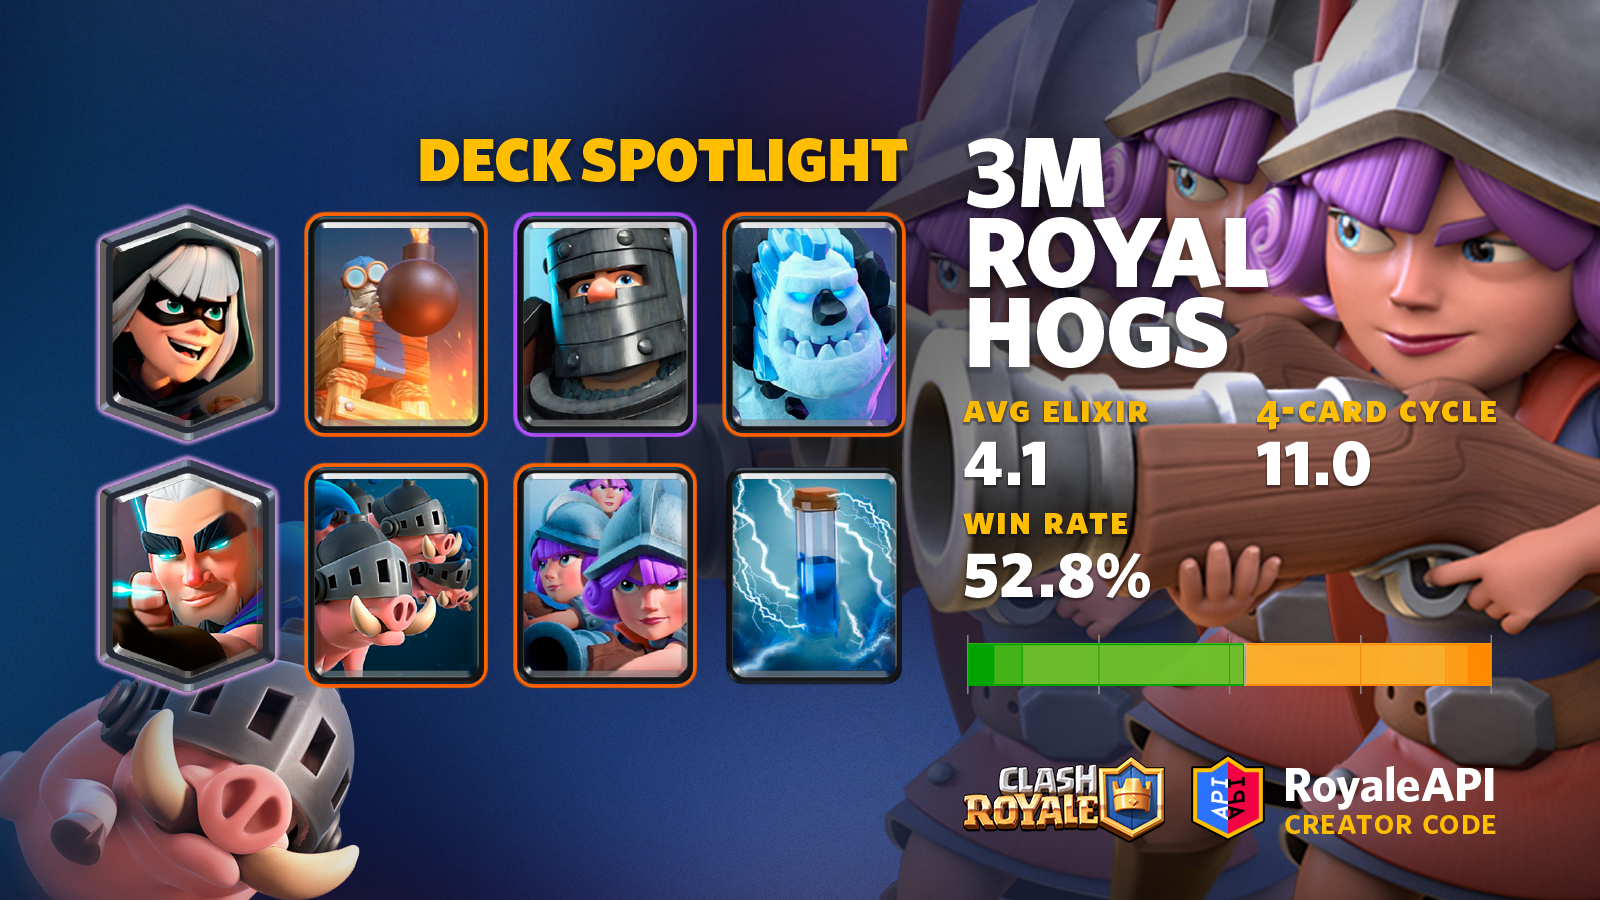 Best Arena 4 Hog Deck in Clash Royale!